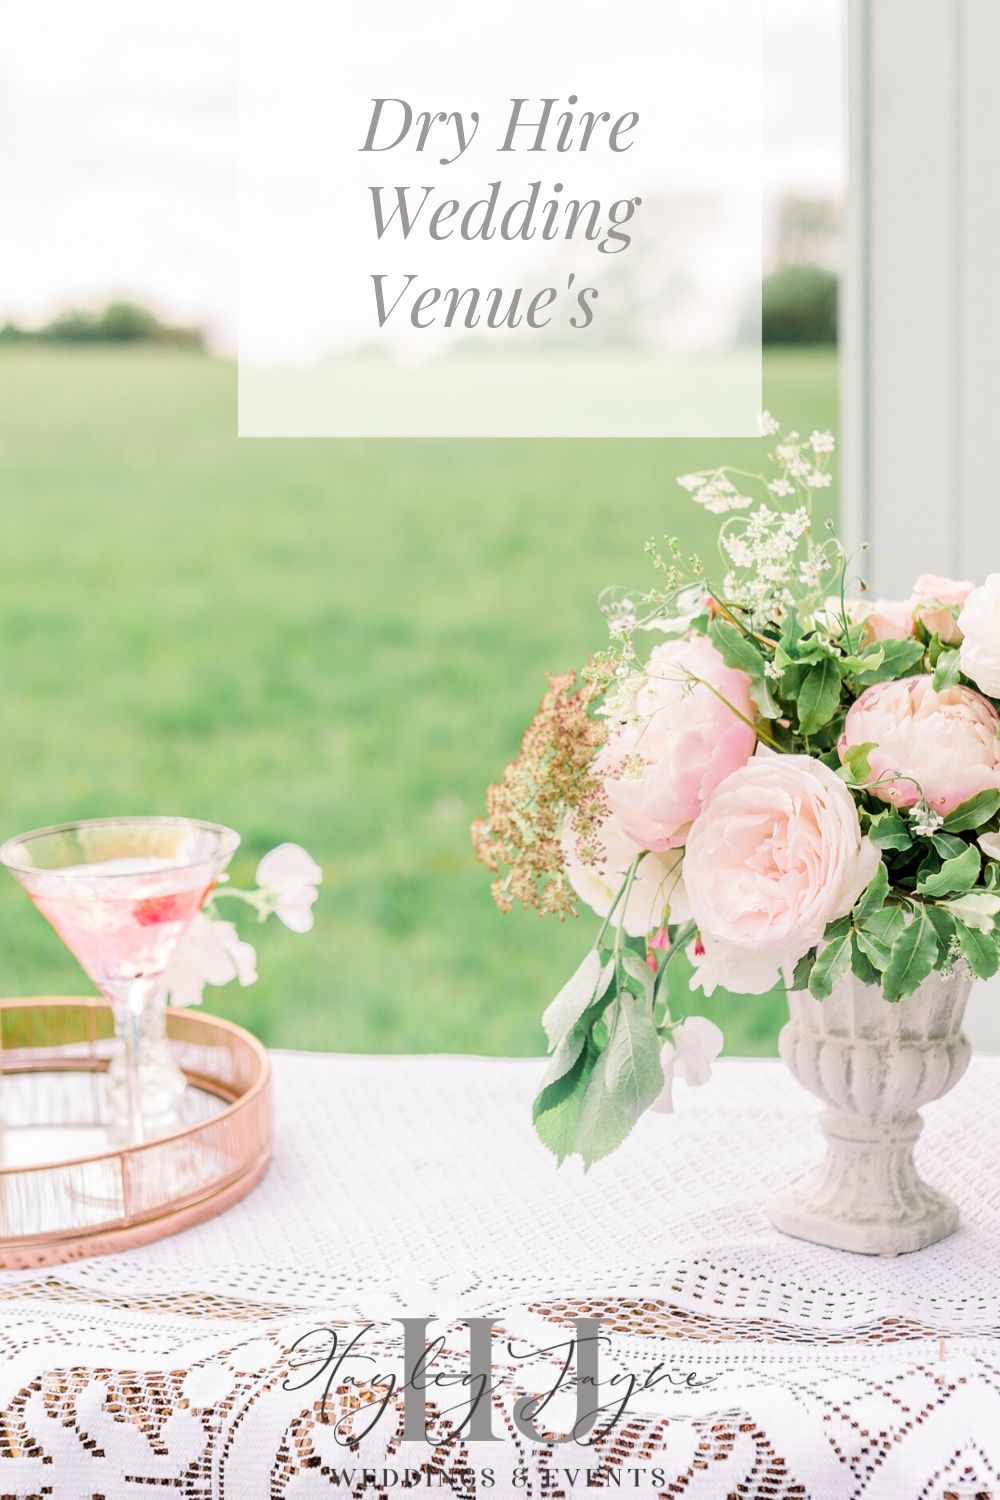 Choosing a Dry Hire Wedding Venue | Hayley Jayne Weddings & Events